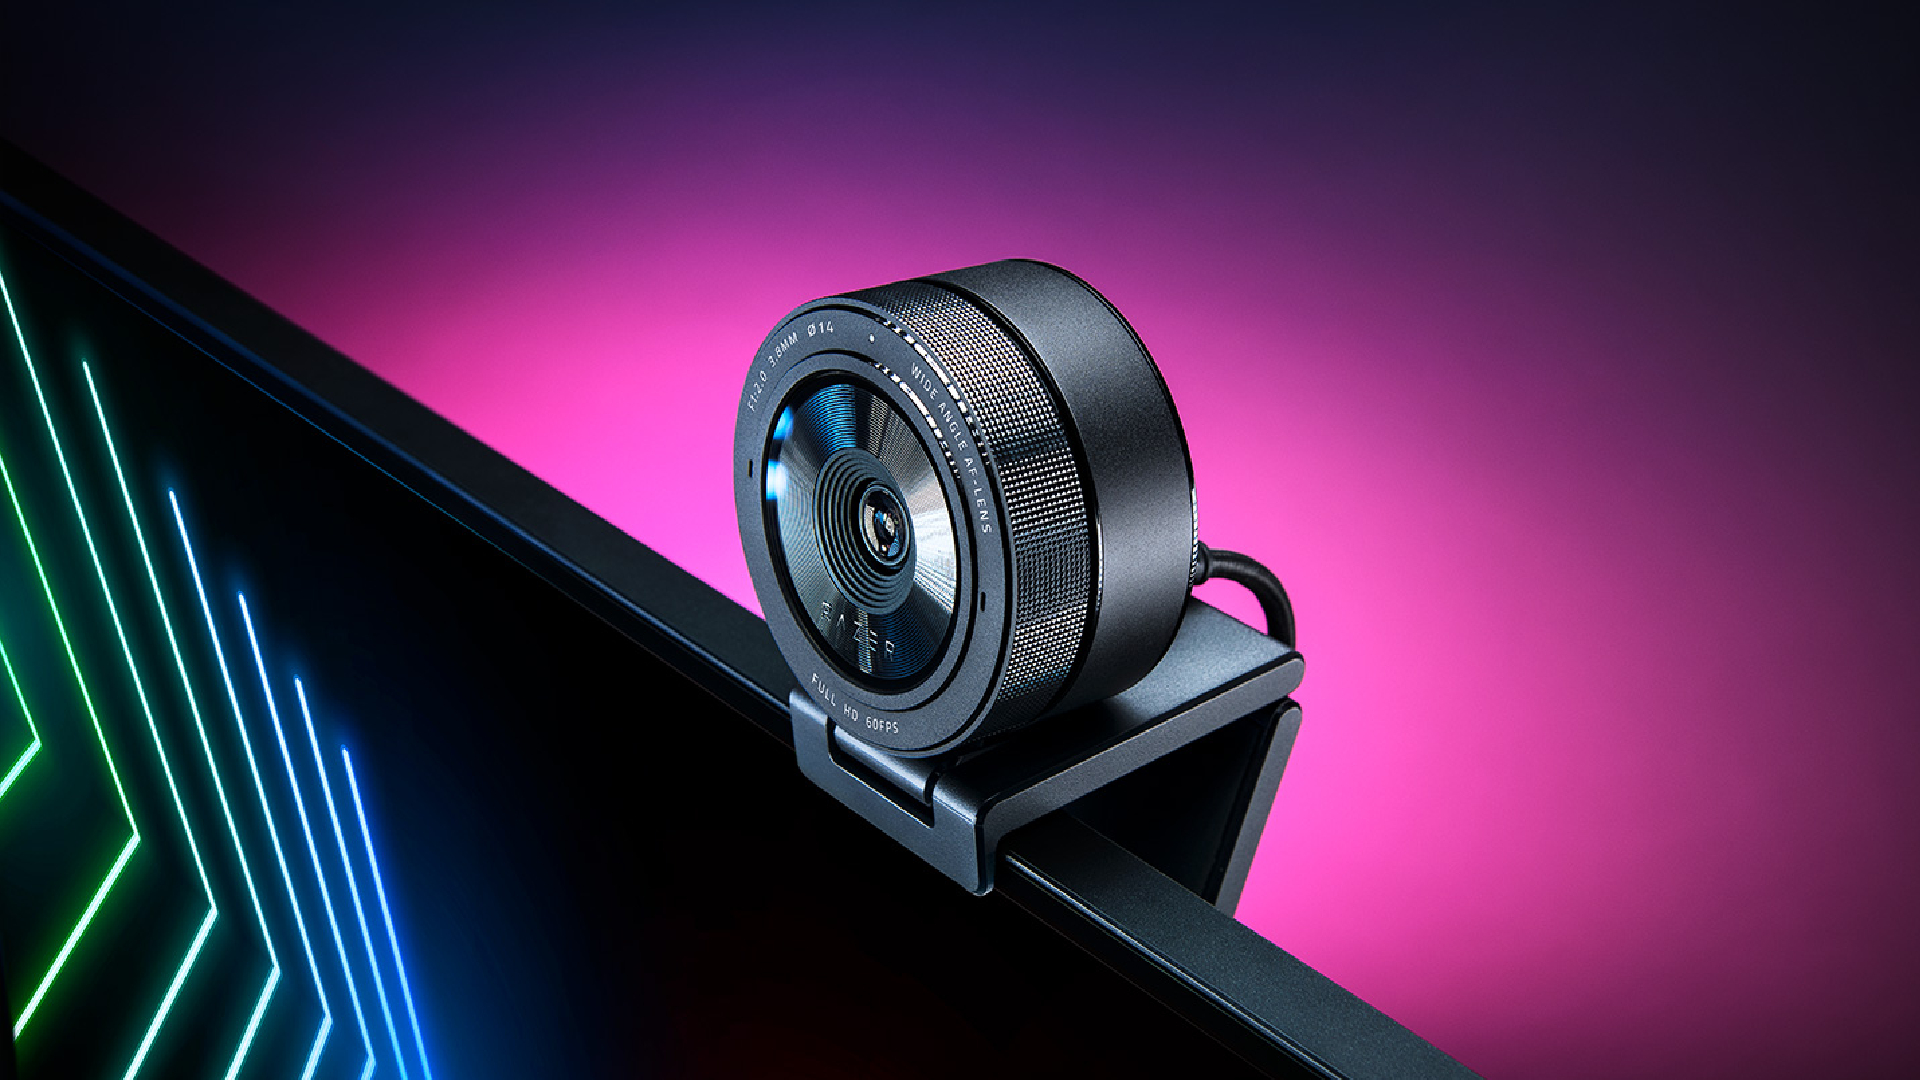 Grab the Razer Kiyo Pro webcam for half price on Amazon